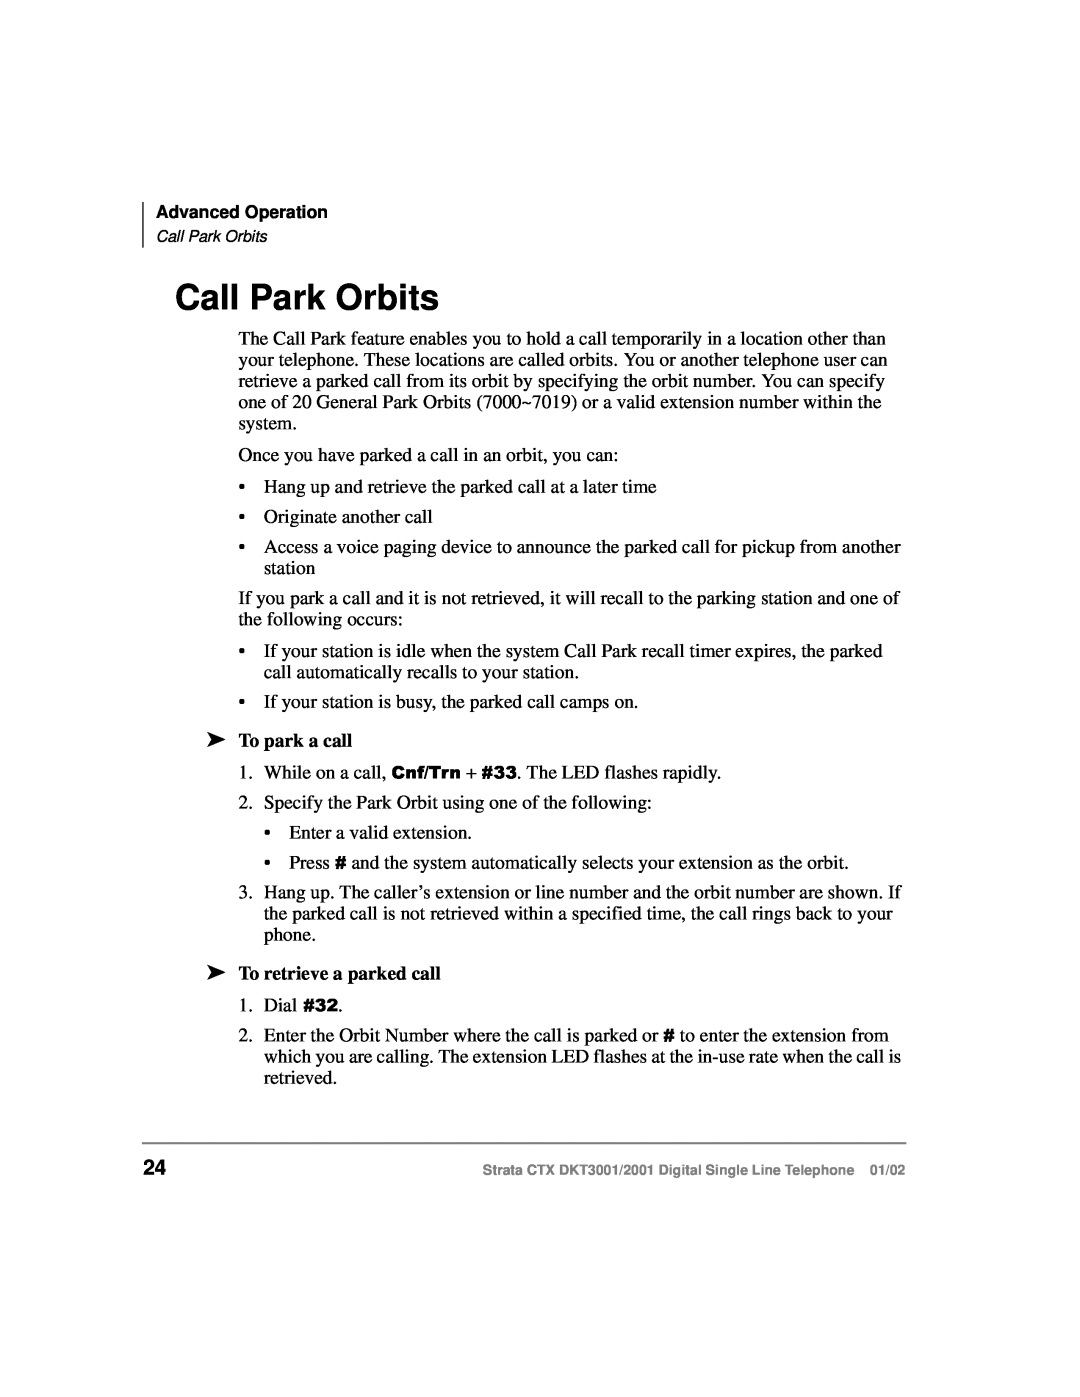 Toshiba DXT3001, 2001 manual Call Park Orbits, To park a call, To retrieve a parked call 